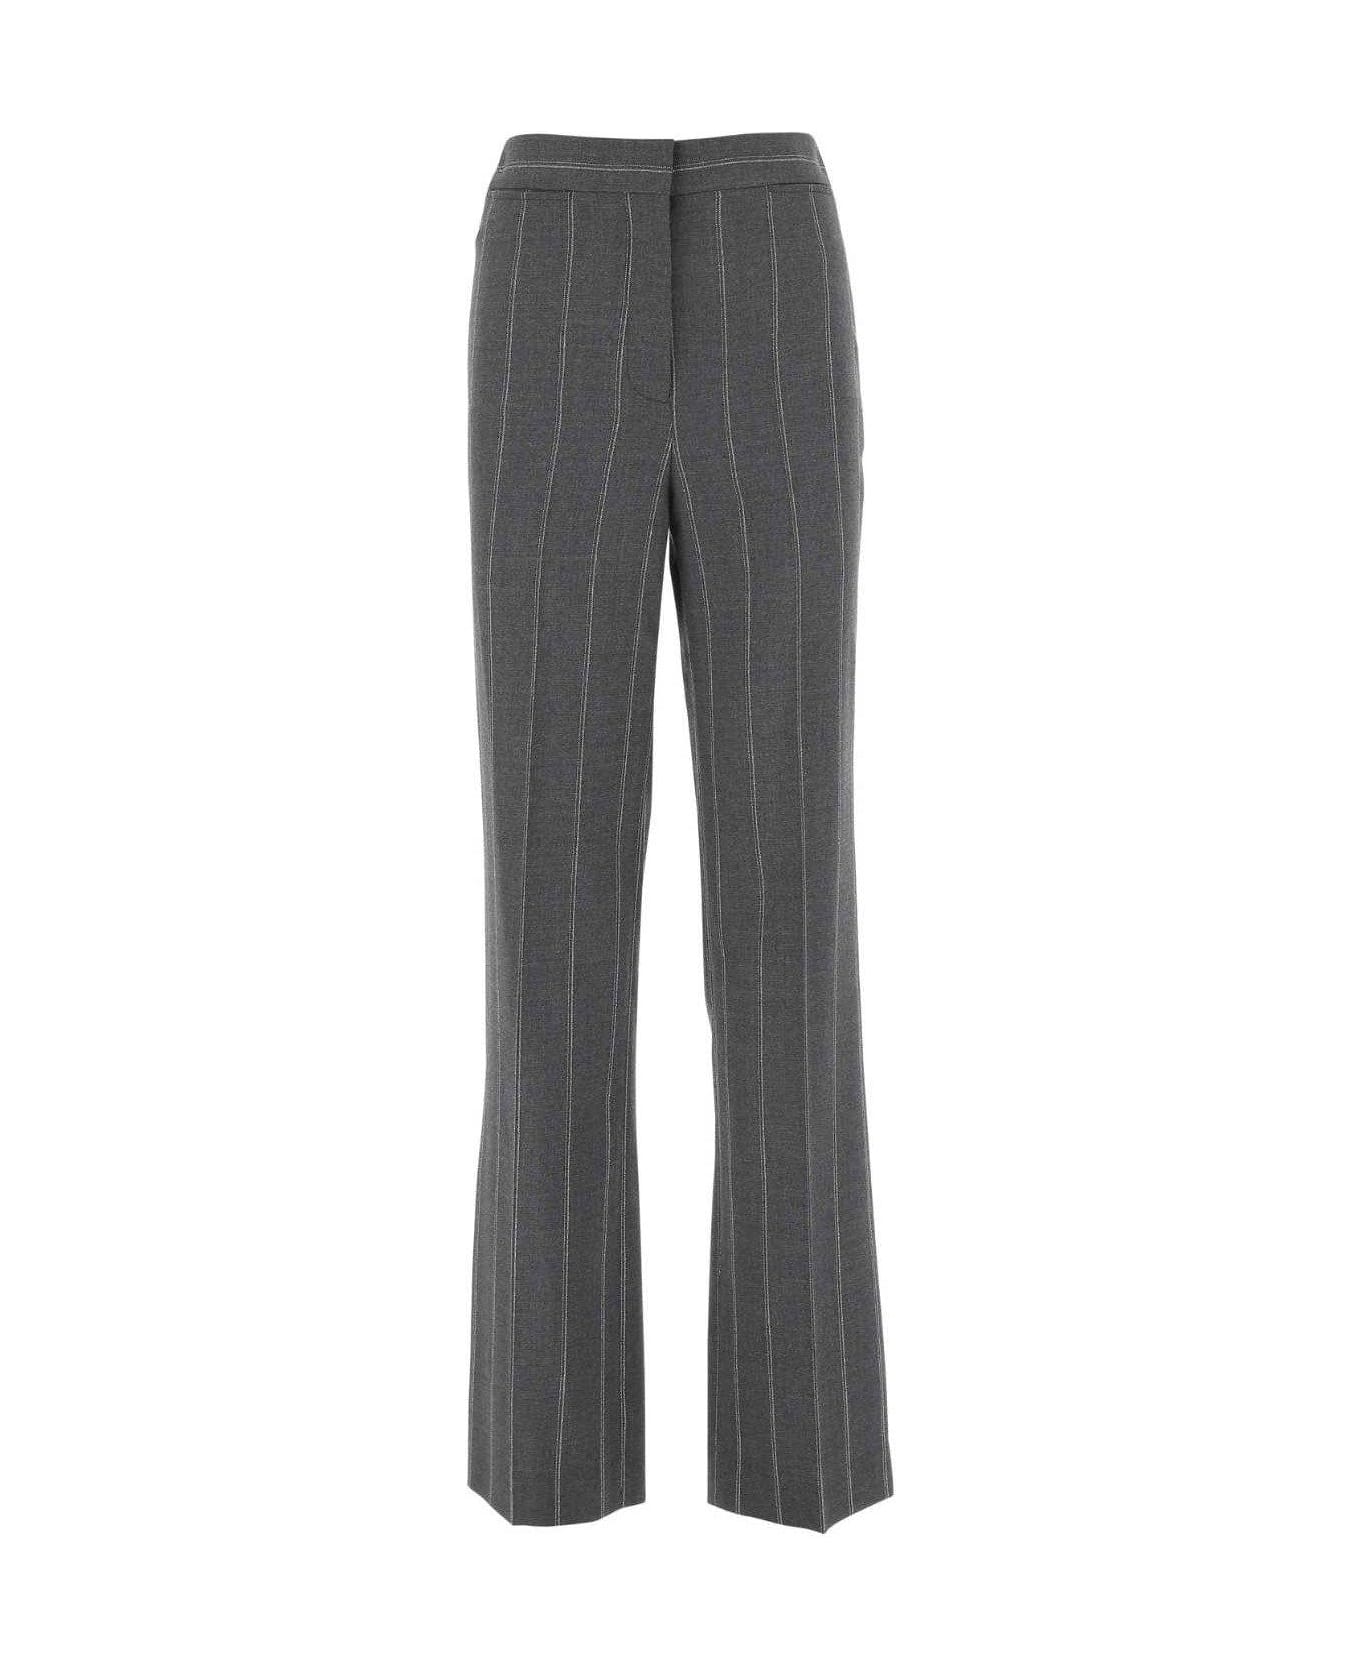 Stella McCartney Striped Tailored Trousers - Grey